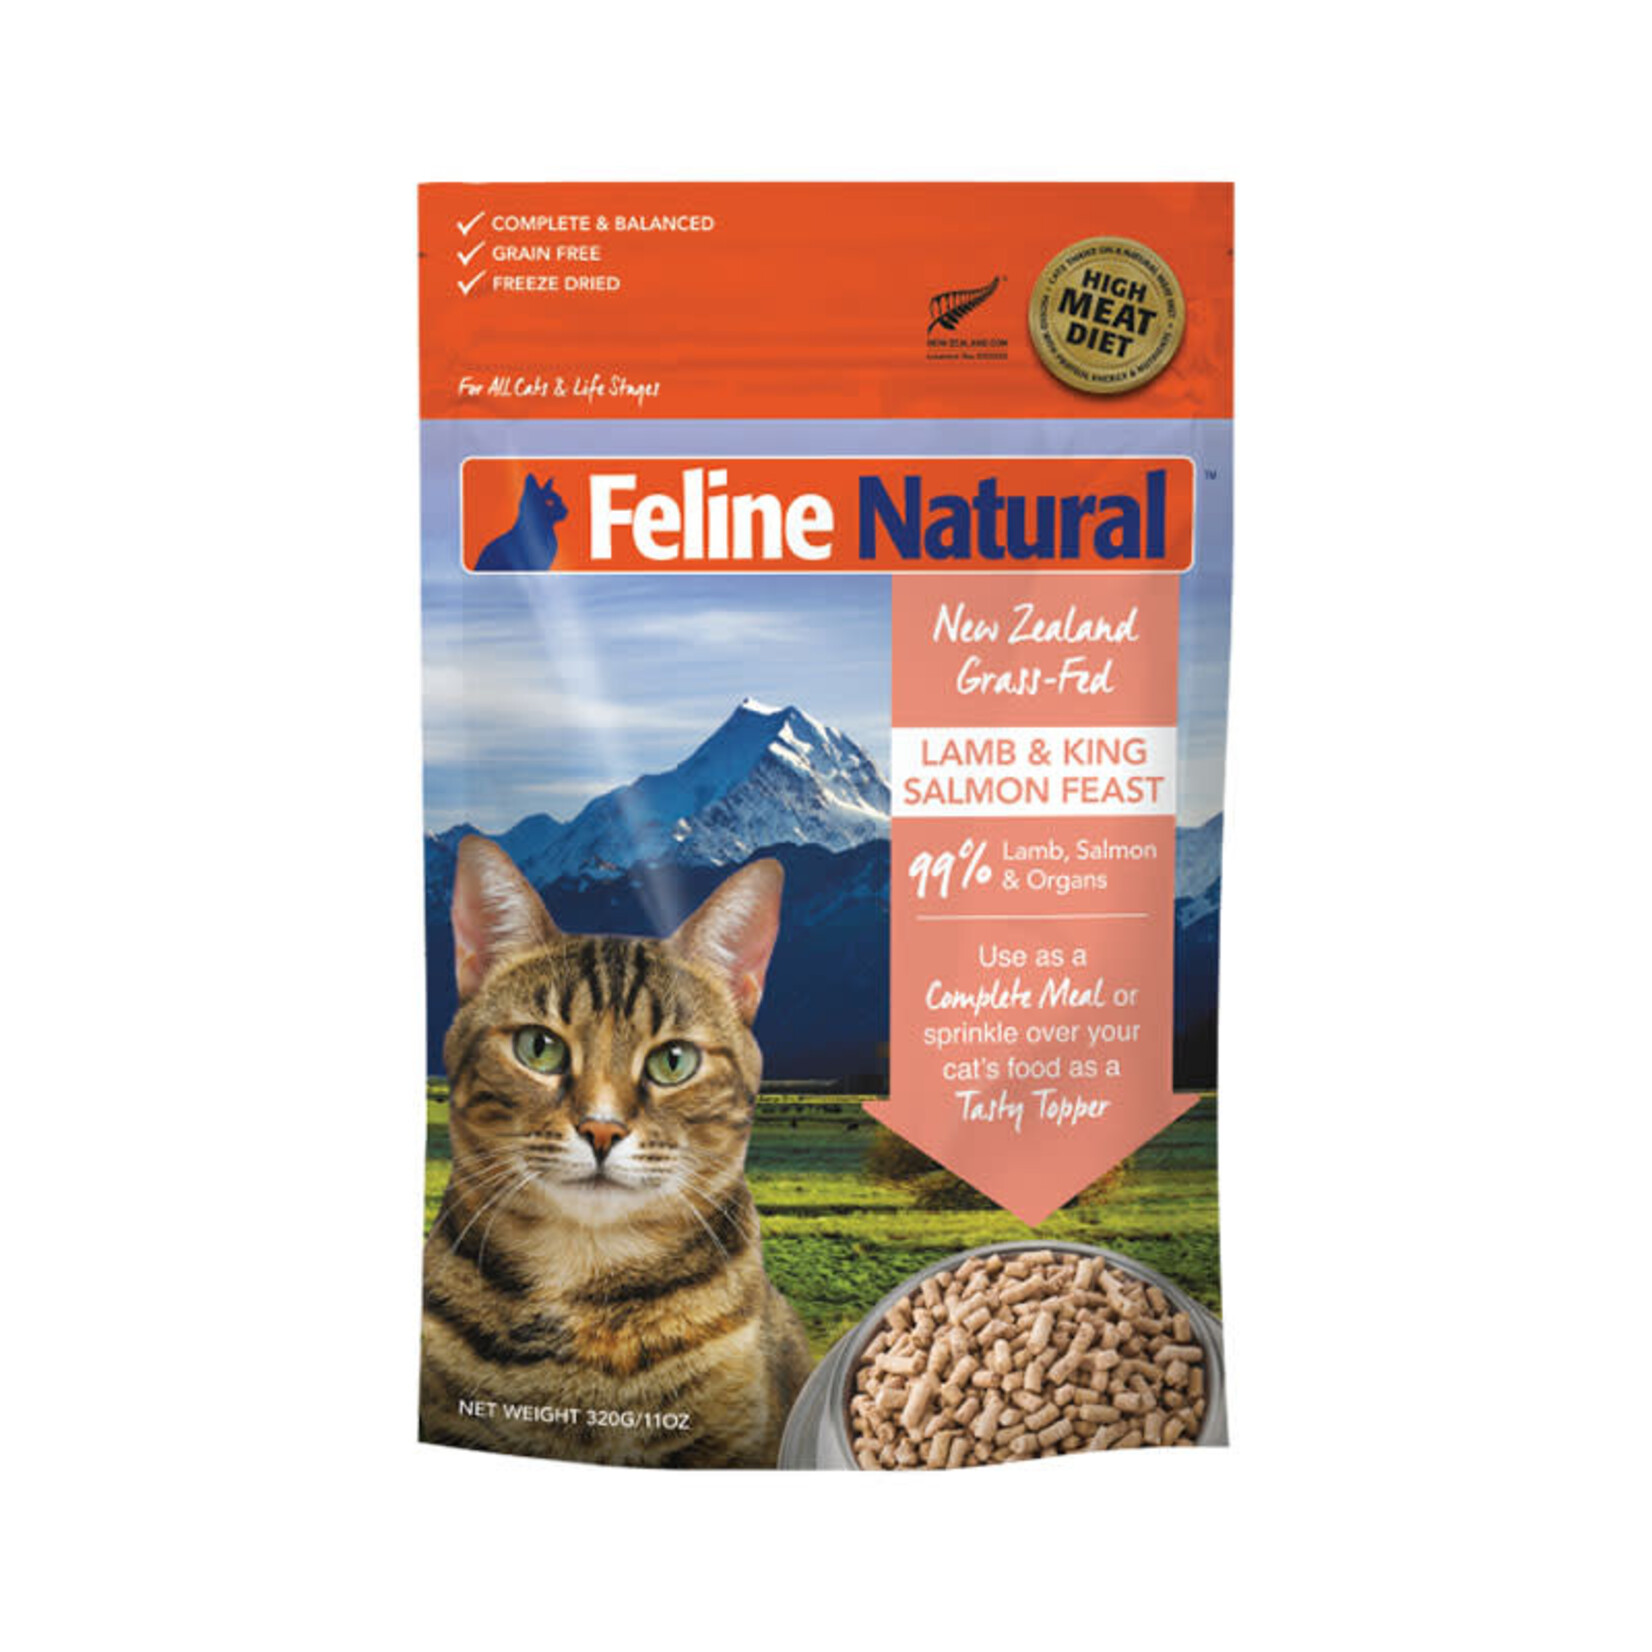 Feline Natural Feline Natural - Freeze Dried Cat Food - Lamb & King Salmon